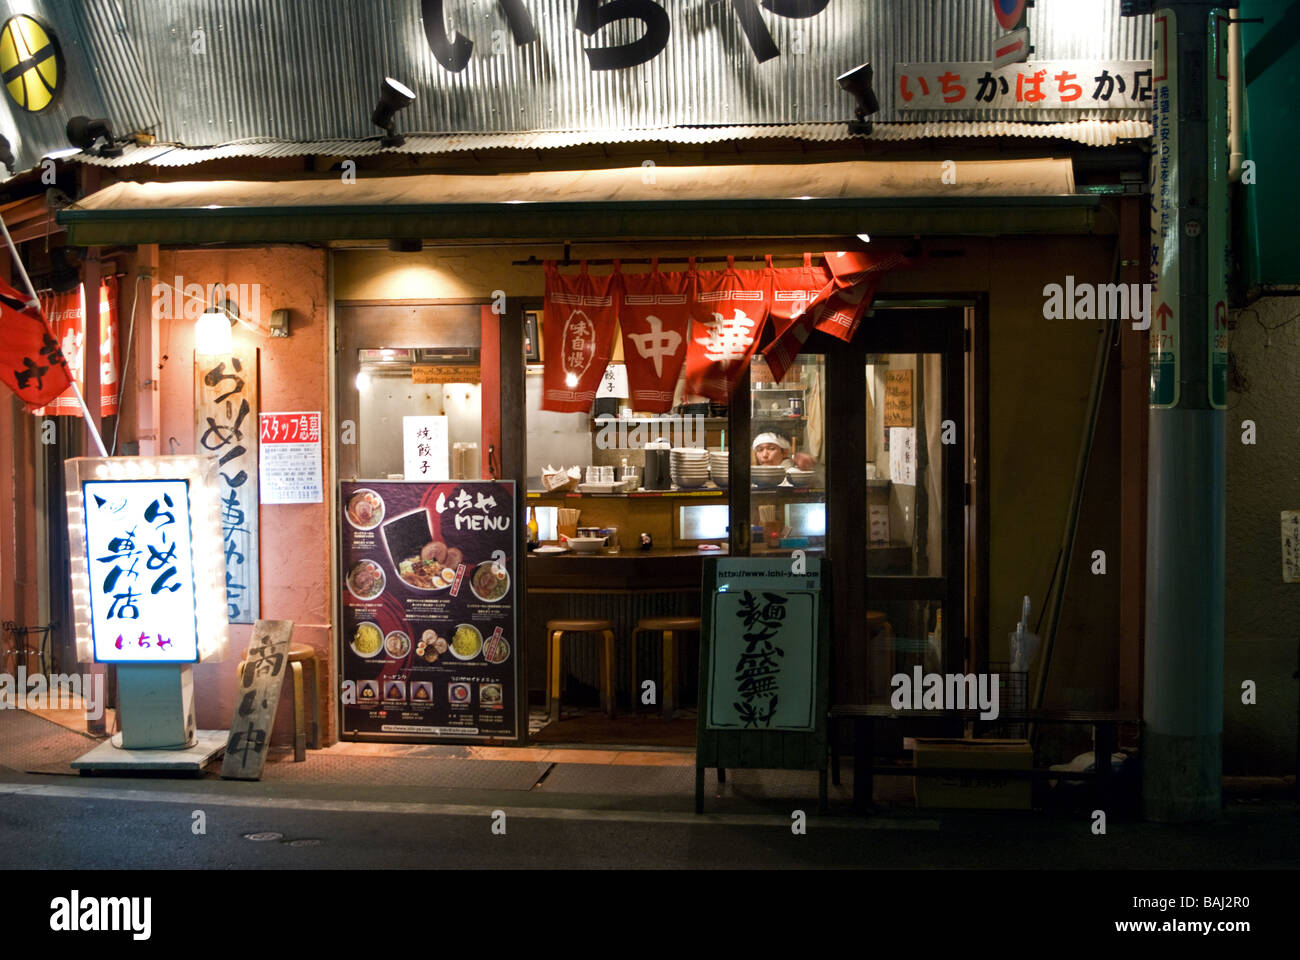 Ramen restaurant tokyo fotografías e imágenes de alta resolución - Alamy